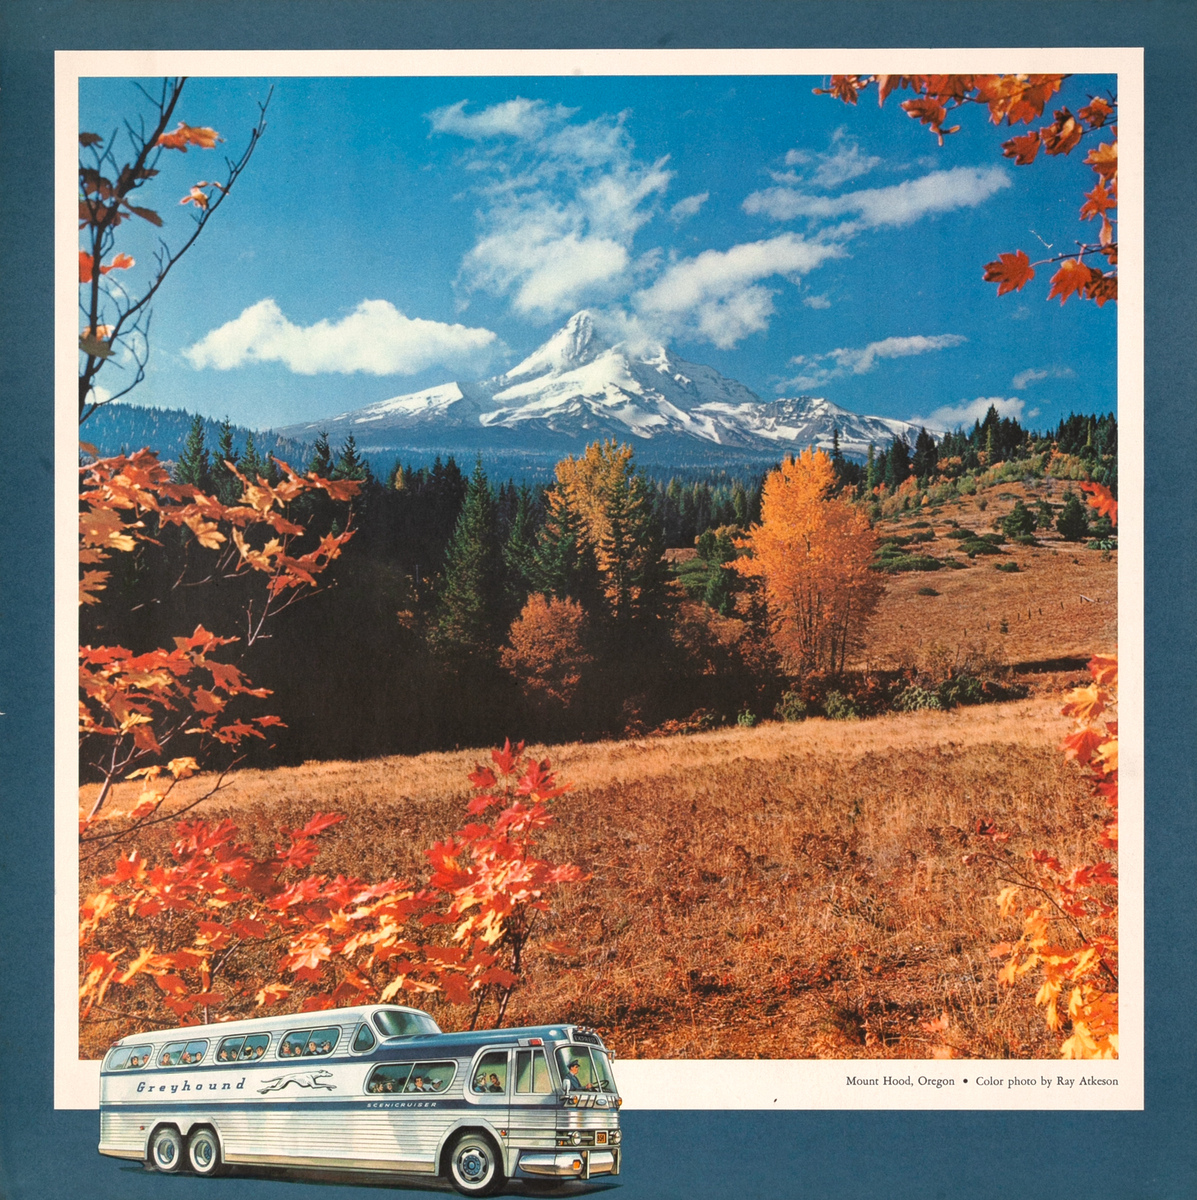 Mount Hood, Oregon, Greyhound Bus Original Travel Poster